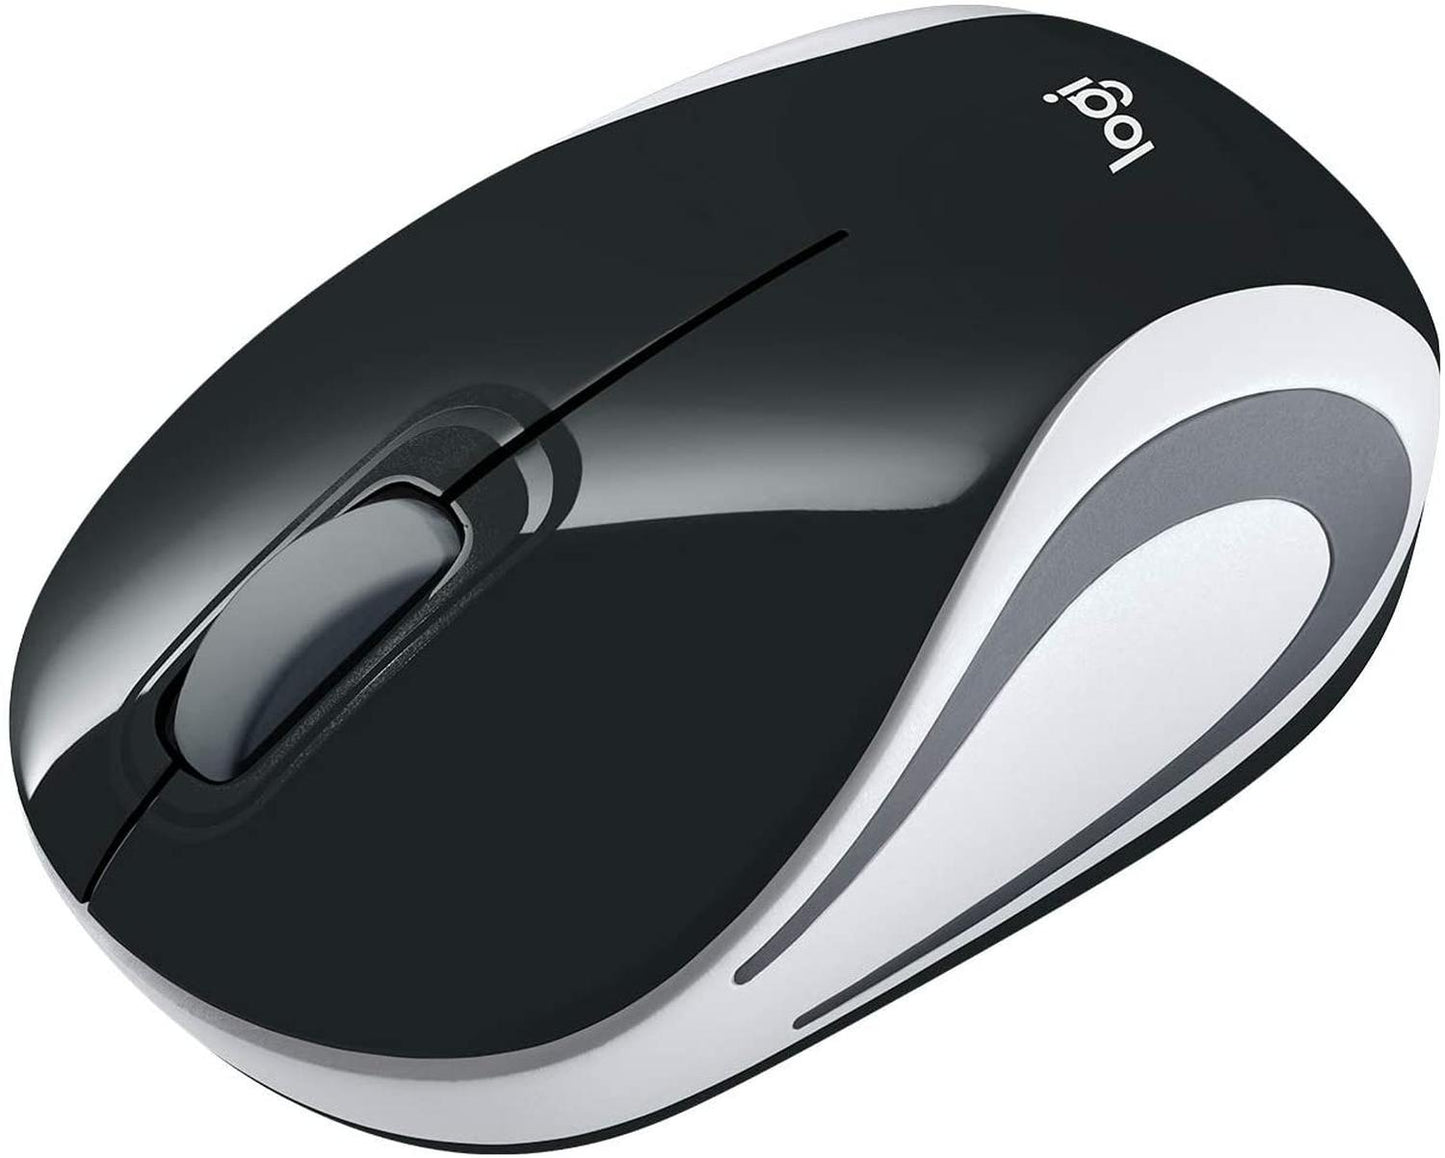 Mini Mouse Logitech Óptico M187, Inalámbrico, USB, 1000DPI, Negro